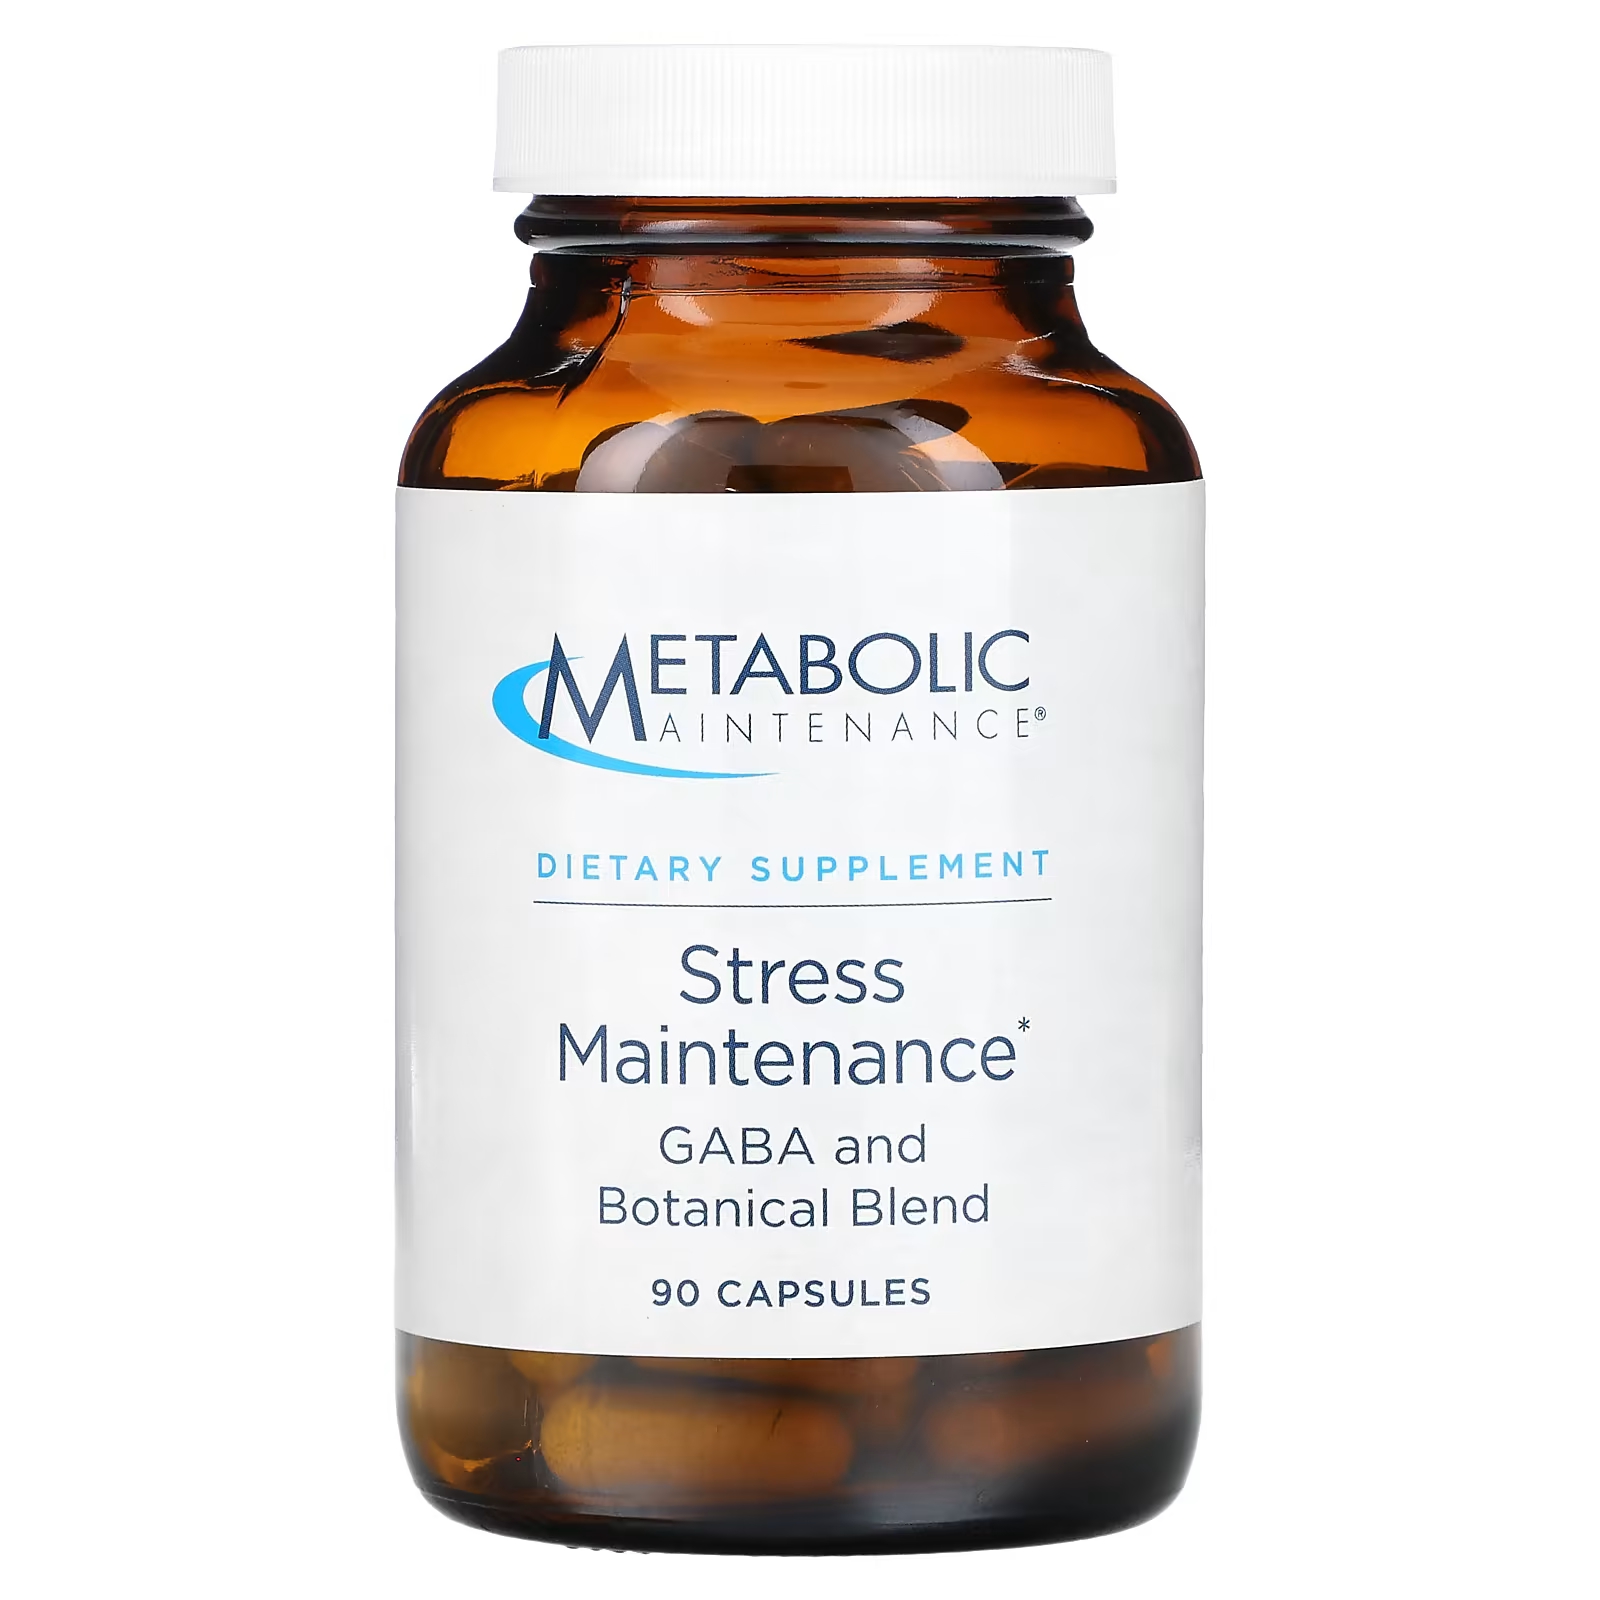 Пищевая добавка Metabolic Maintenance при стрессе, 90 капсул пищевая добавка metabolic maintenance при стрессе 90 капсул